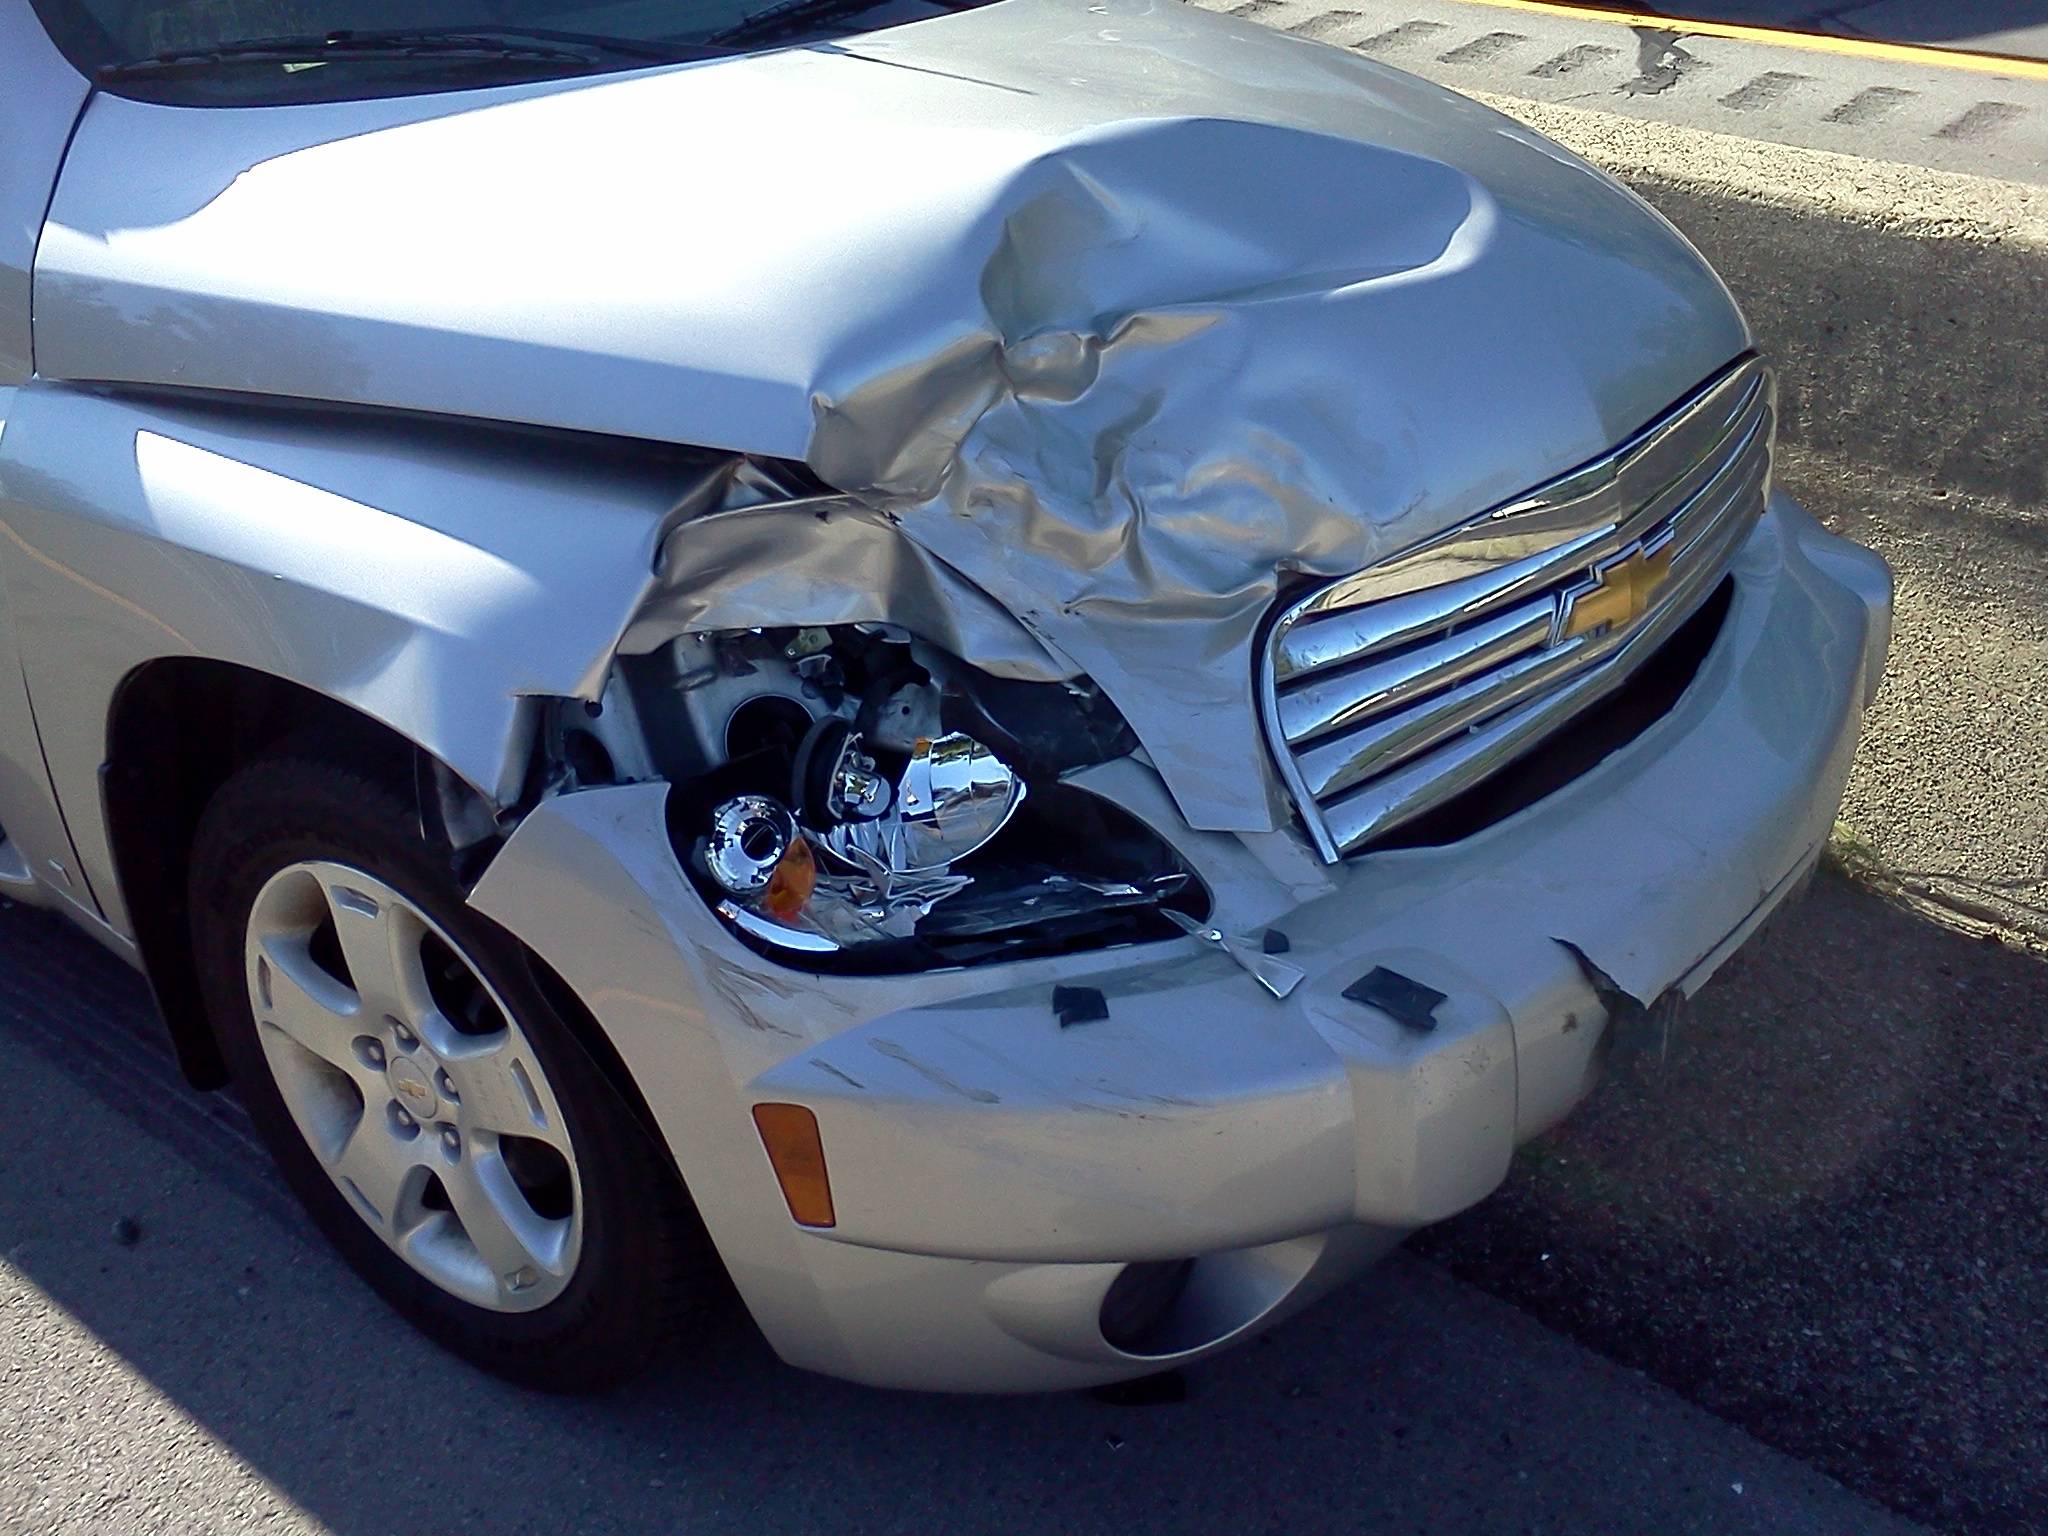 2007 Chevrolet HHR involved in crash